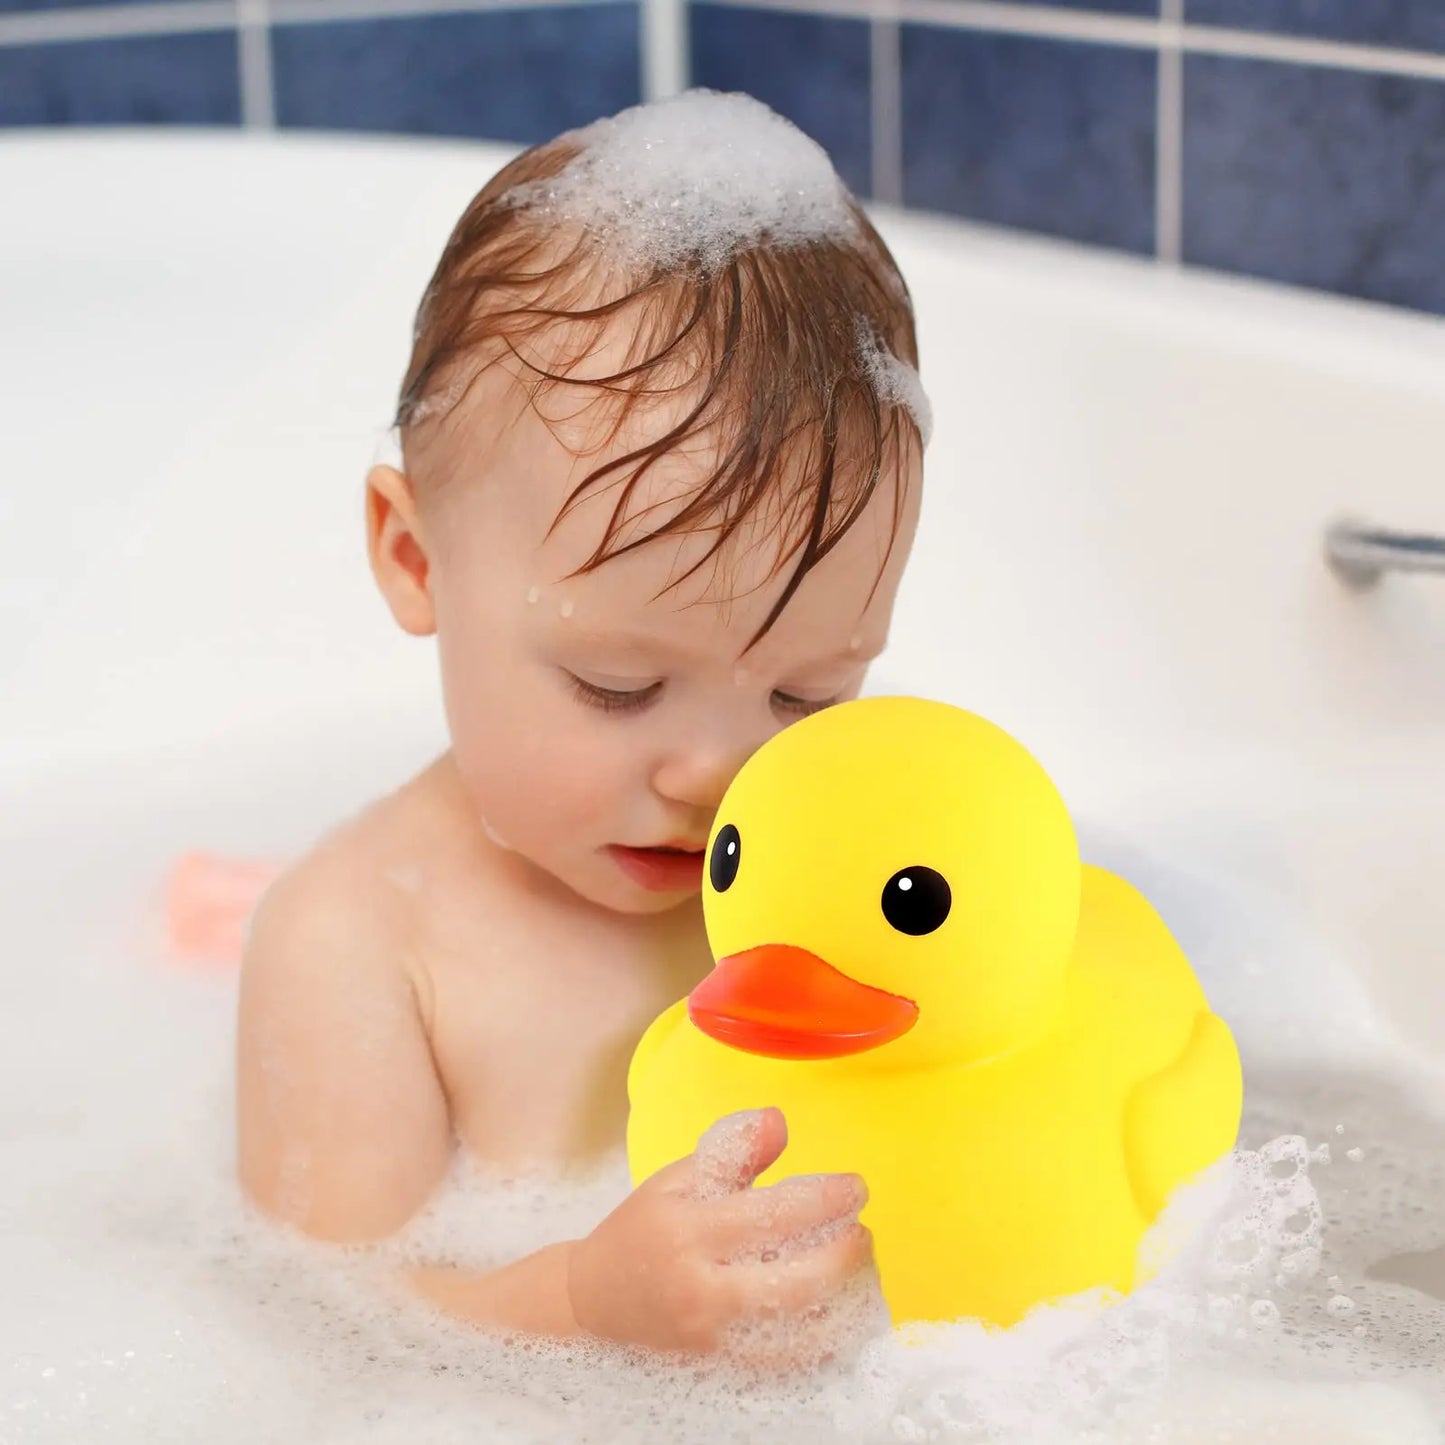 2 Pcs Jumbo Rubber Duck 10.2 Inch Duck Bath Toy Giant Rubber Duck Large Rubber Ducky Bath Toy Squeaky Big Yellow Rubber Ducks